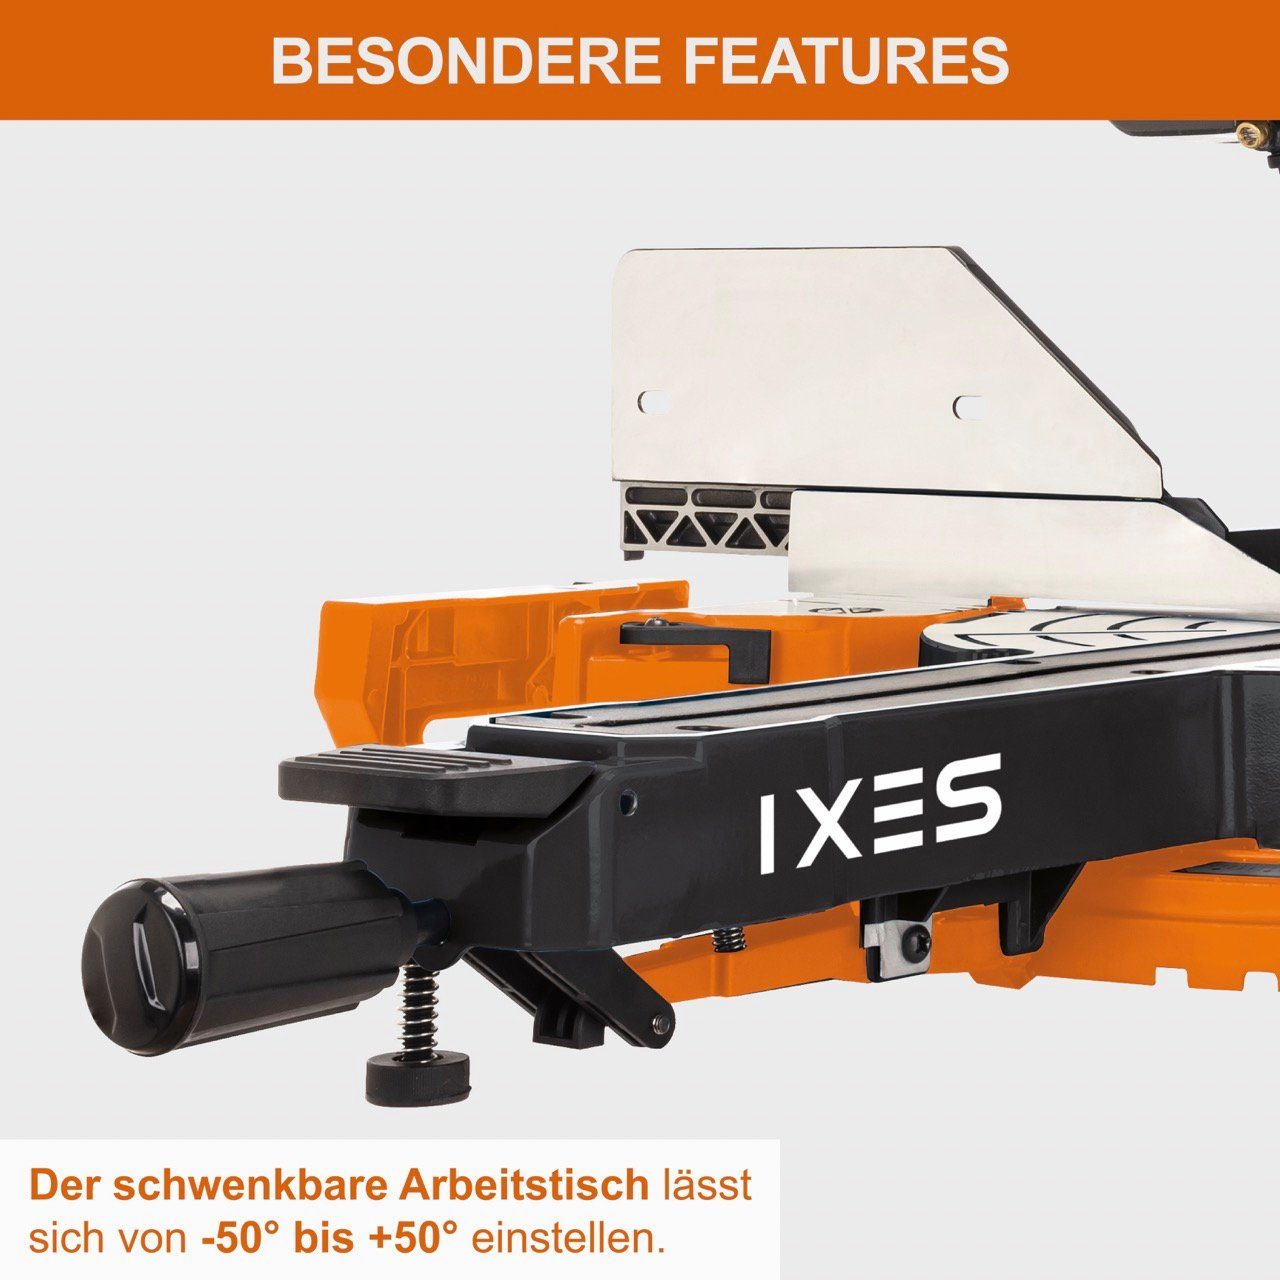 IXES Kappsäge Scheppach Gehrungssäge 305mm und Kapp- Zugsäge Zug-, Laser Posaunenauszug 2000W Gehrungssäge